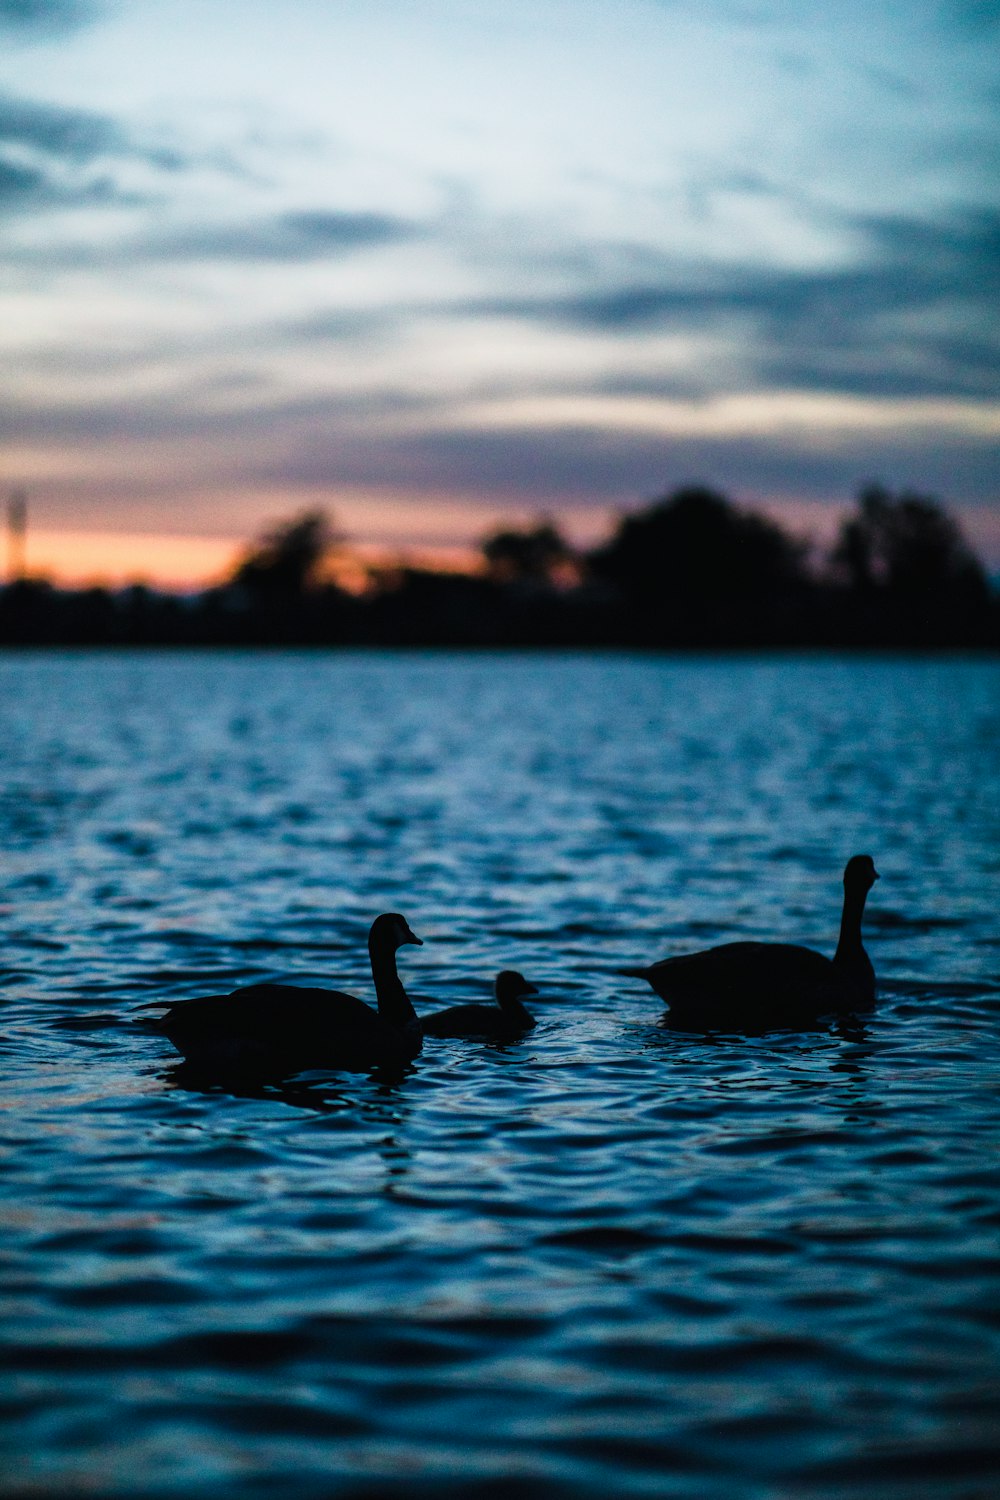 three ducks on calm body of water